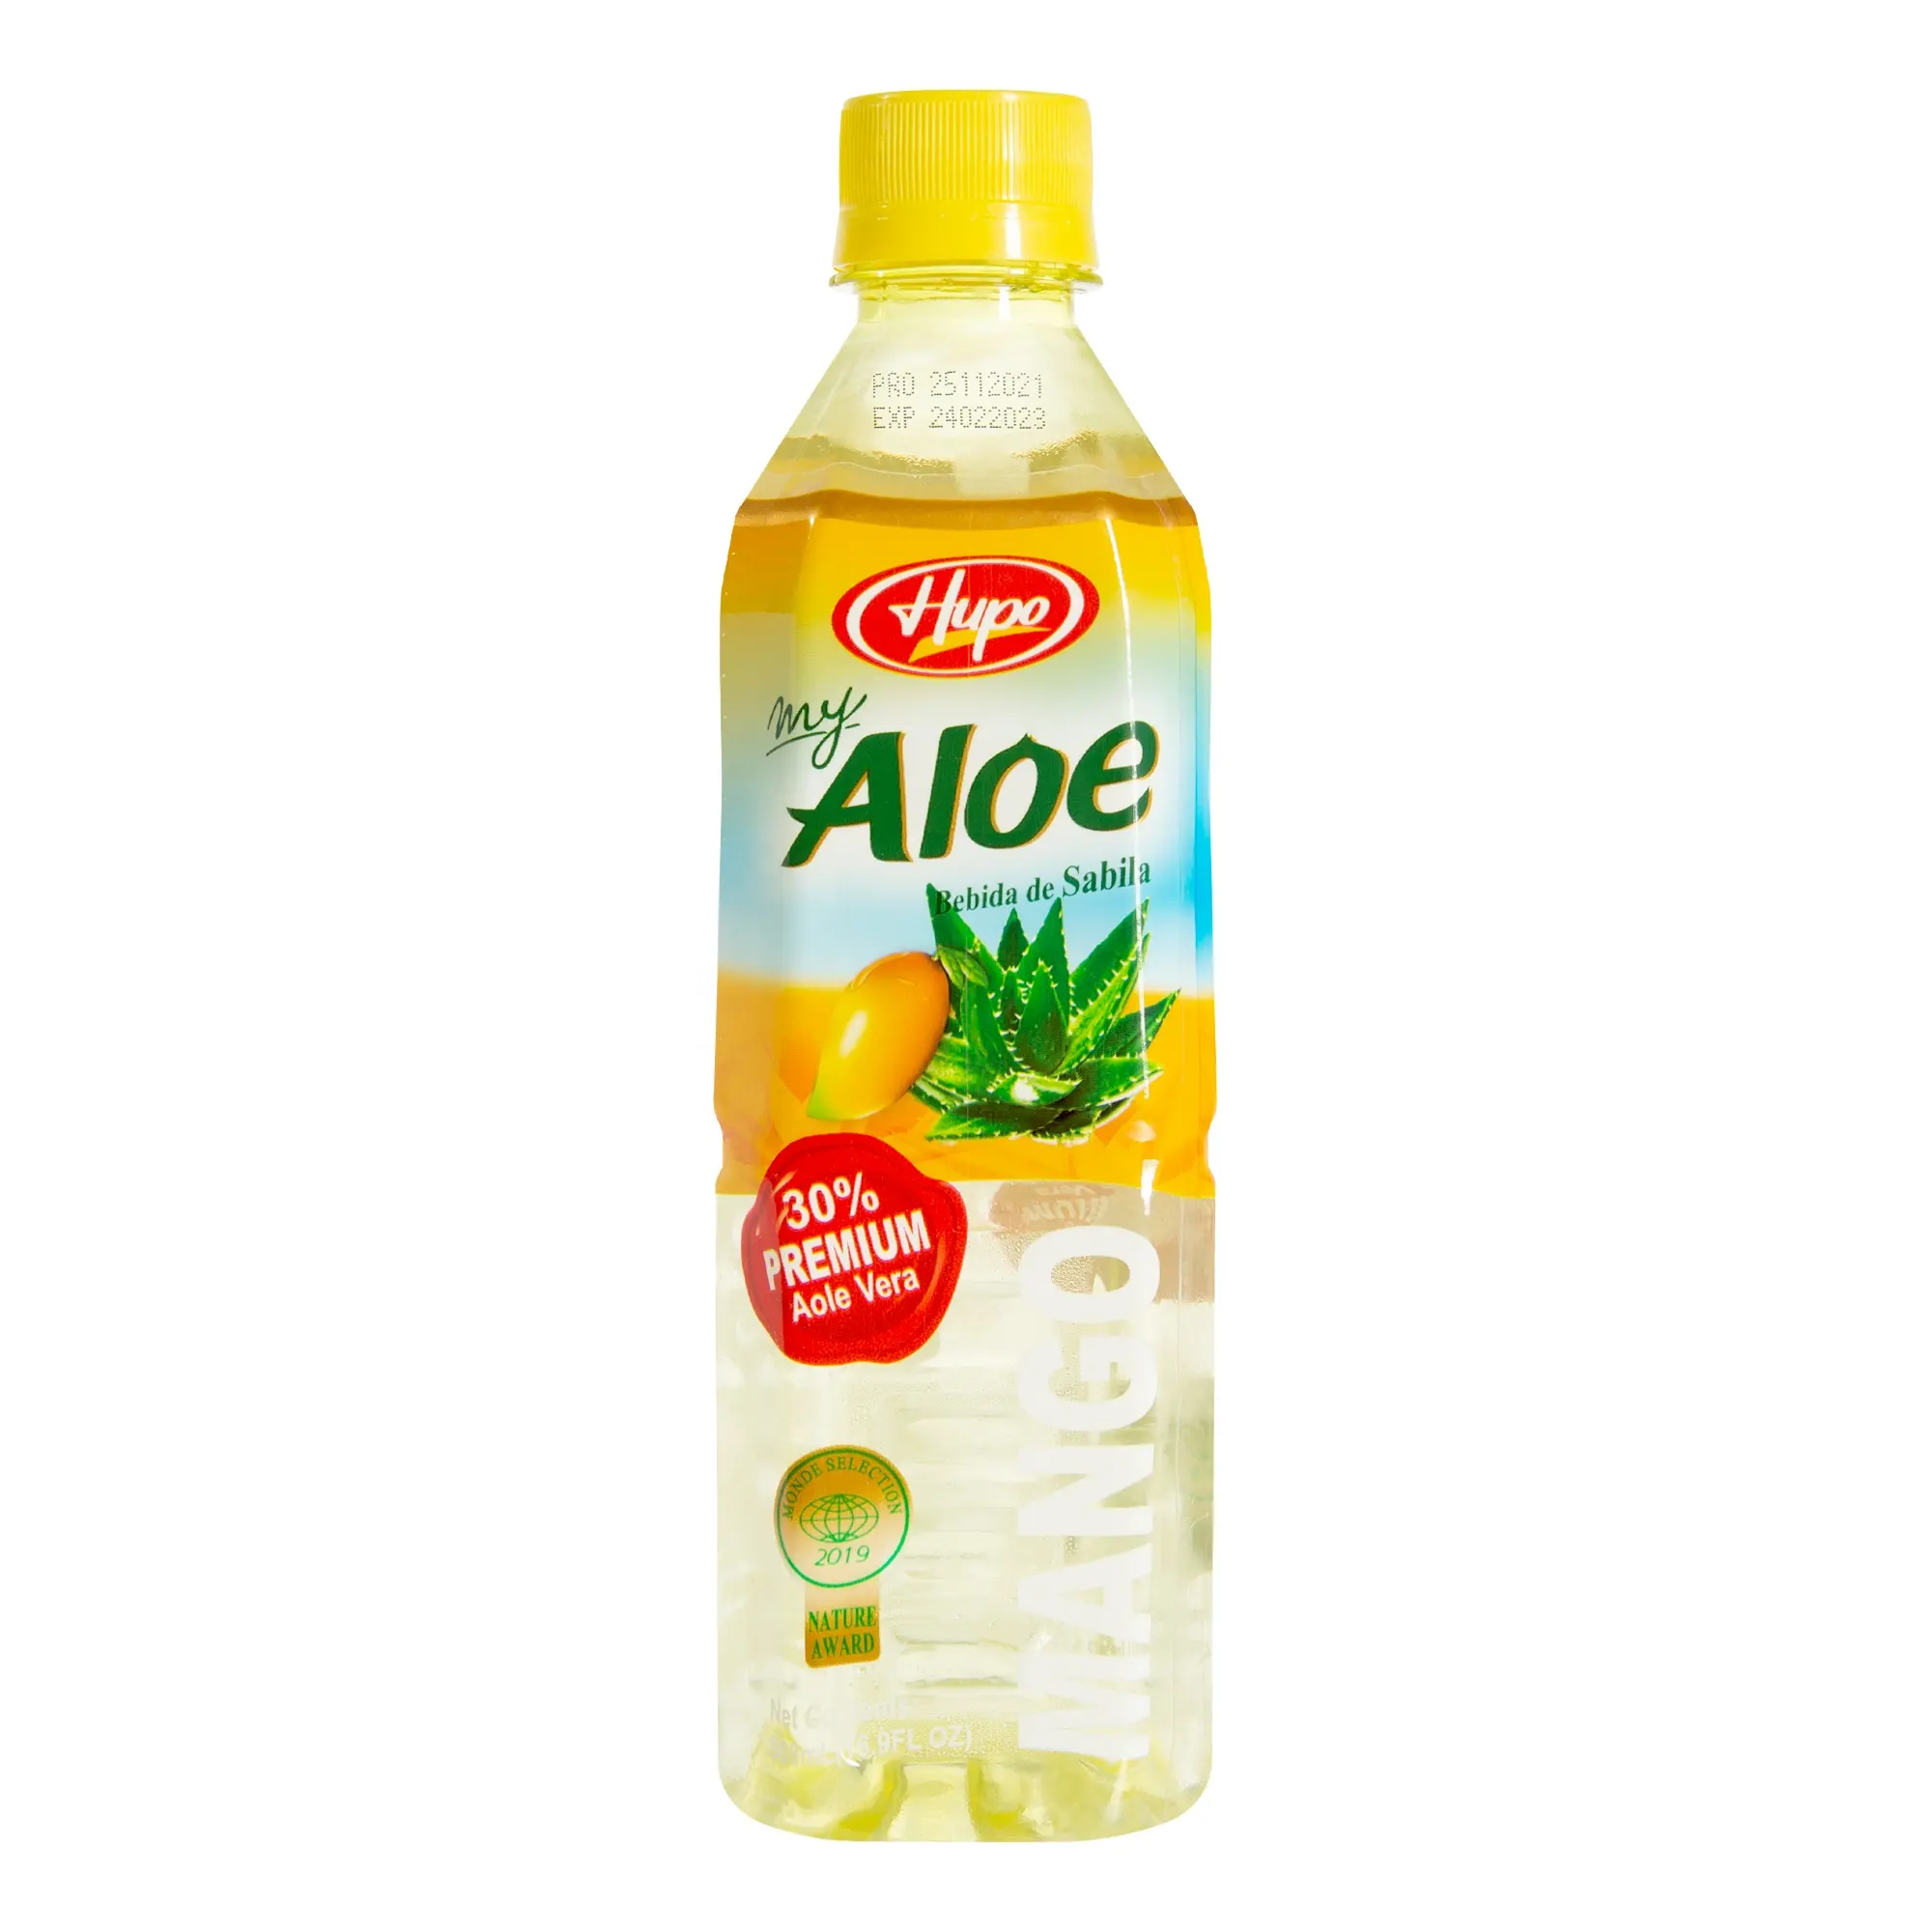 Hupo brand 500ml mango aloe vera drink